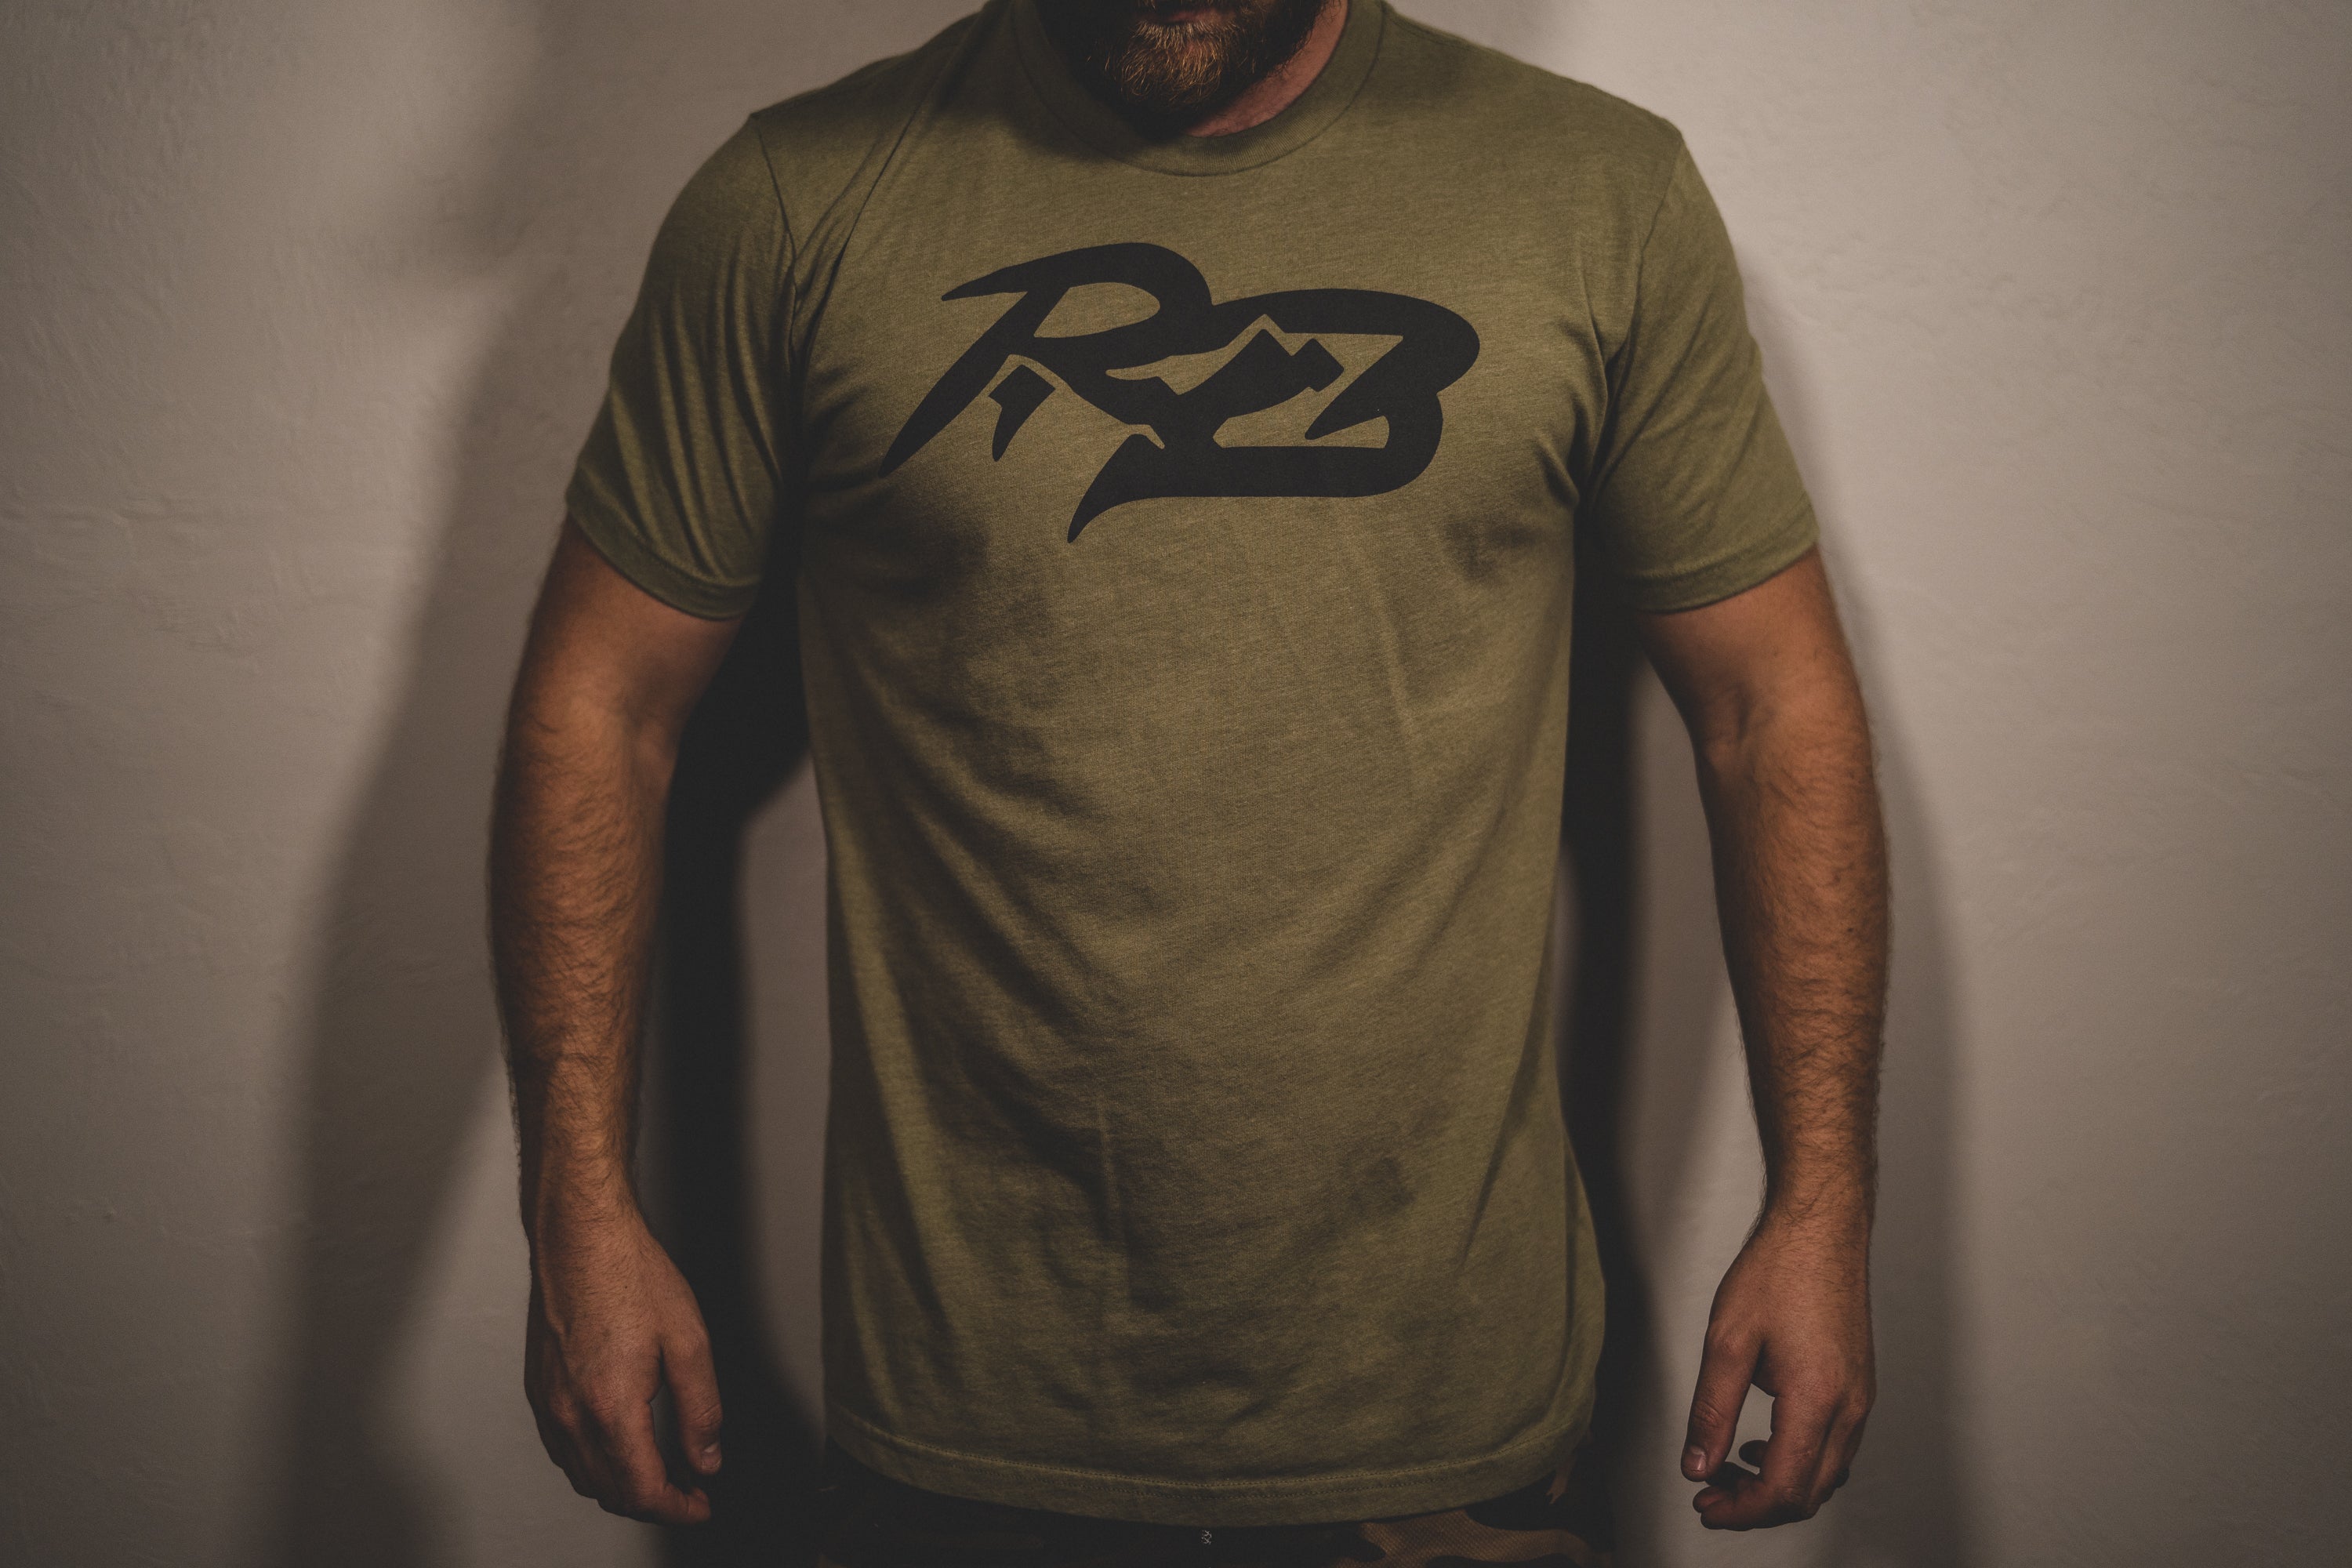 Buy Online Latest High Quality Green RB shirt - Ridge Belts